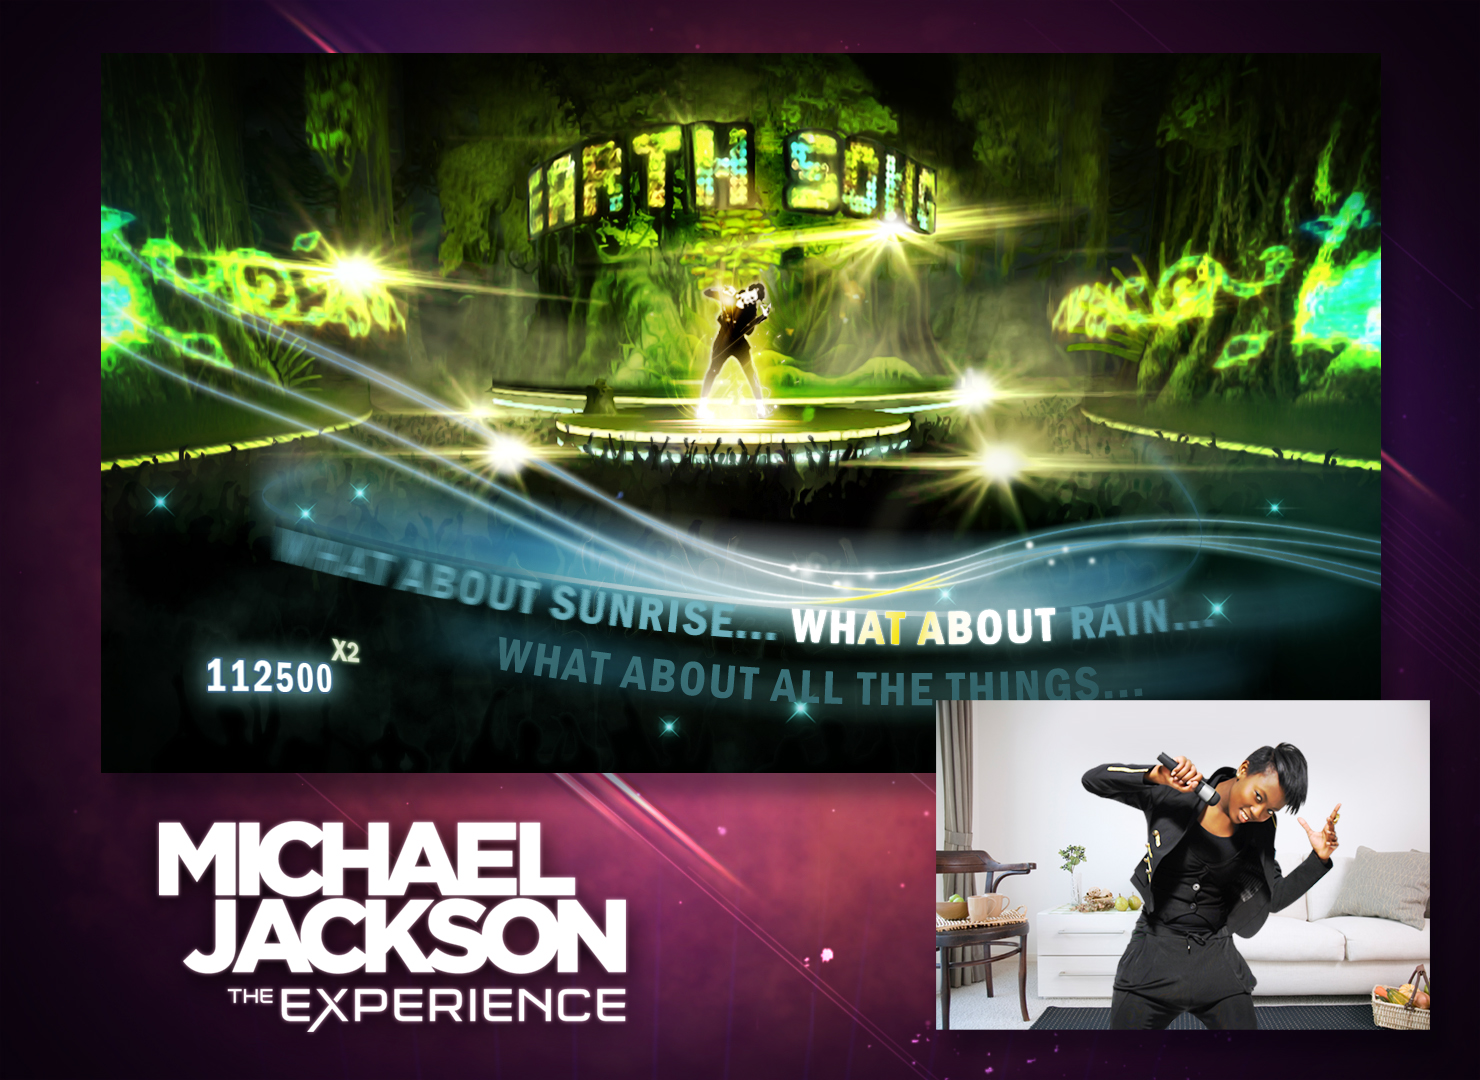 Michael Jackson The Experience (Xbox 360) Ubisoft, 8888526292 - image 4 of 6